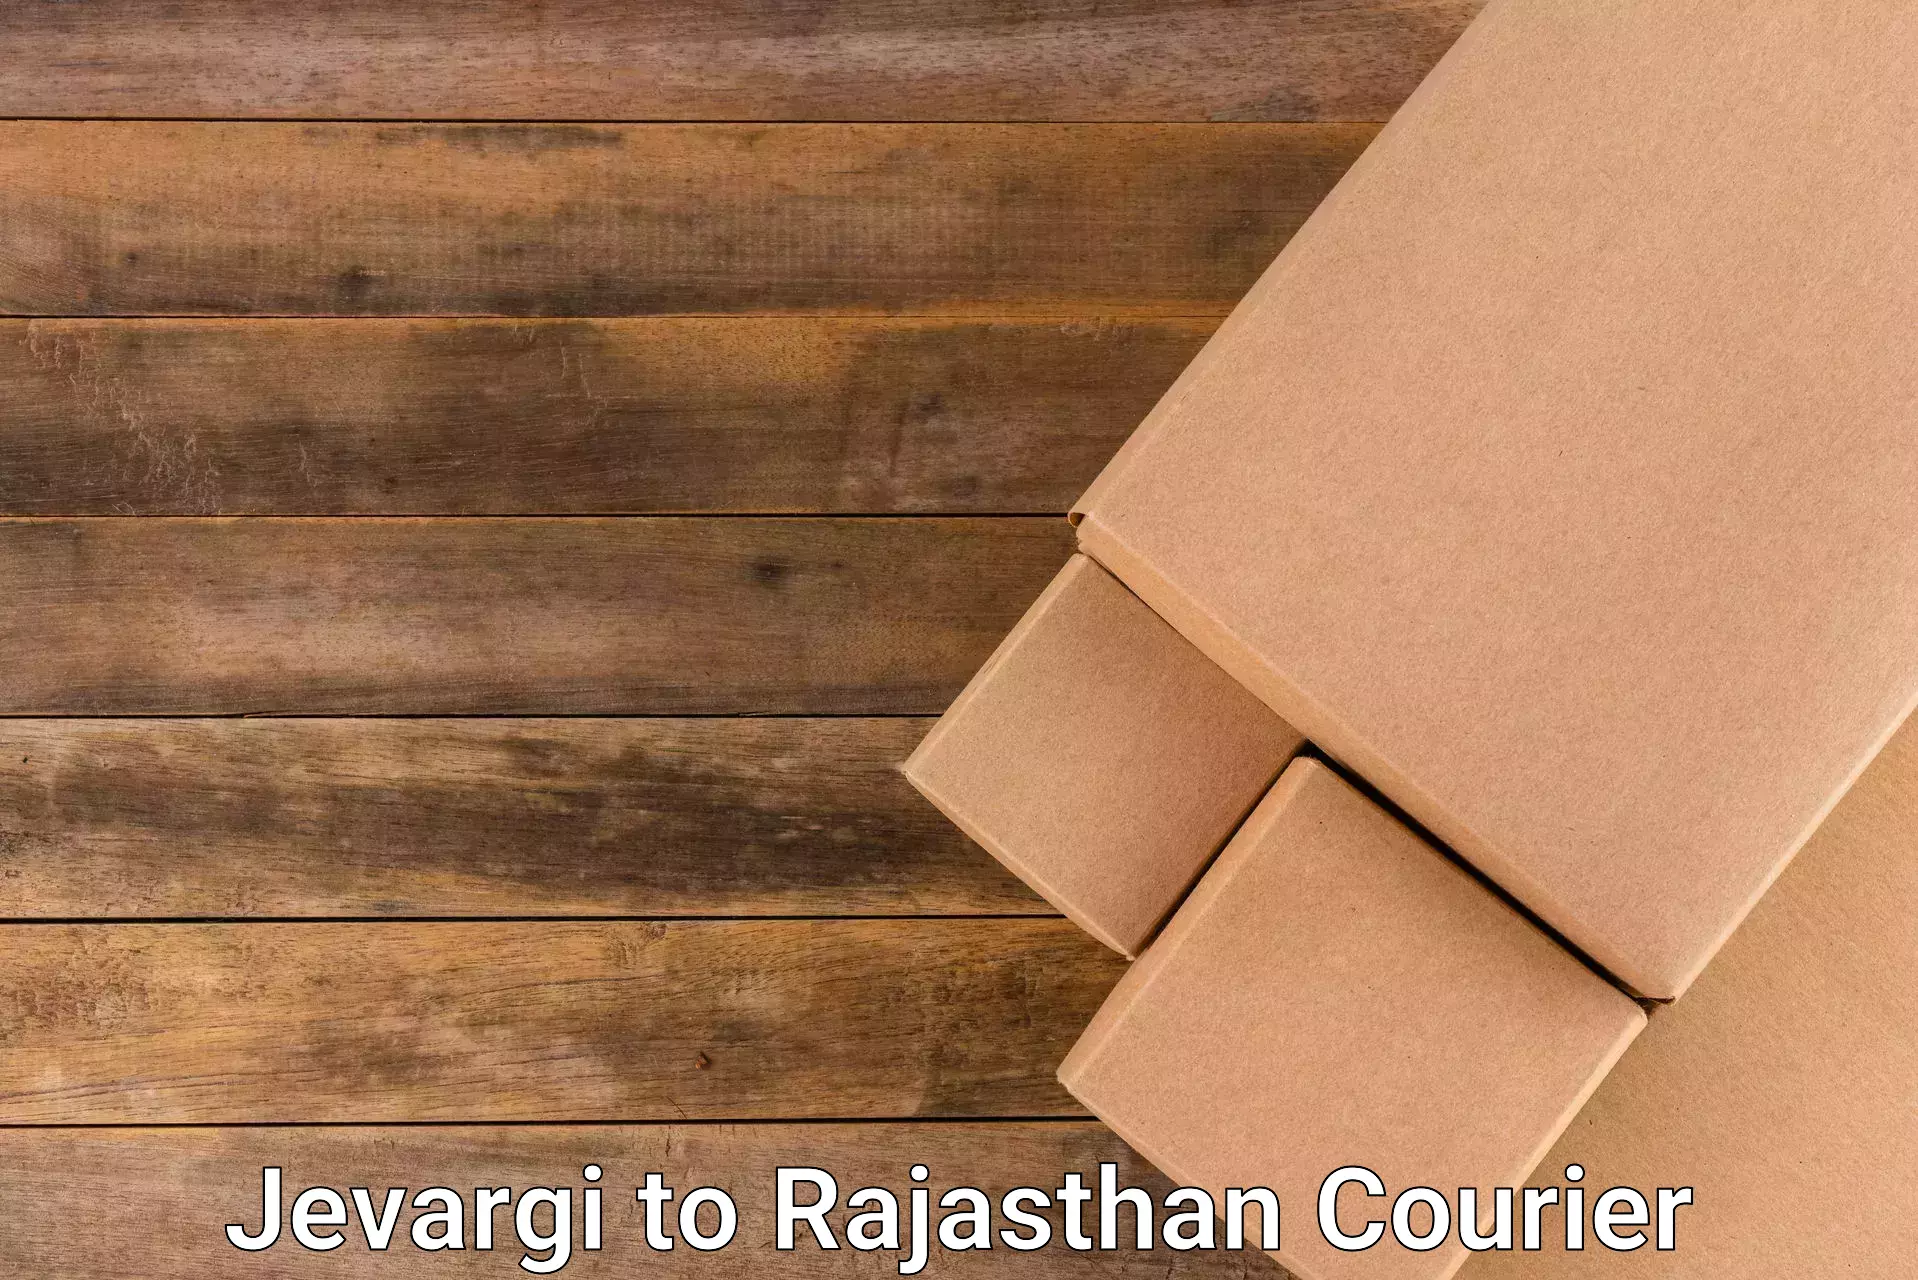 Courier service comparison in Jevargi to Yathalakunta